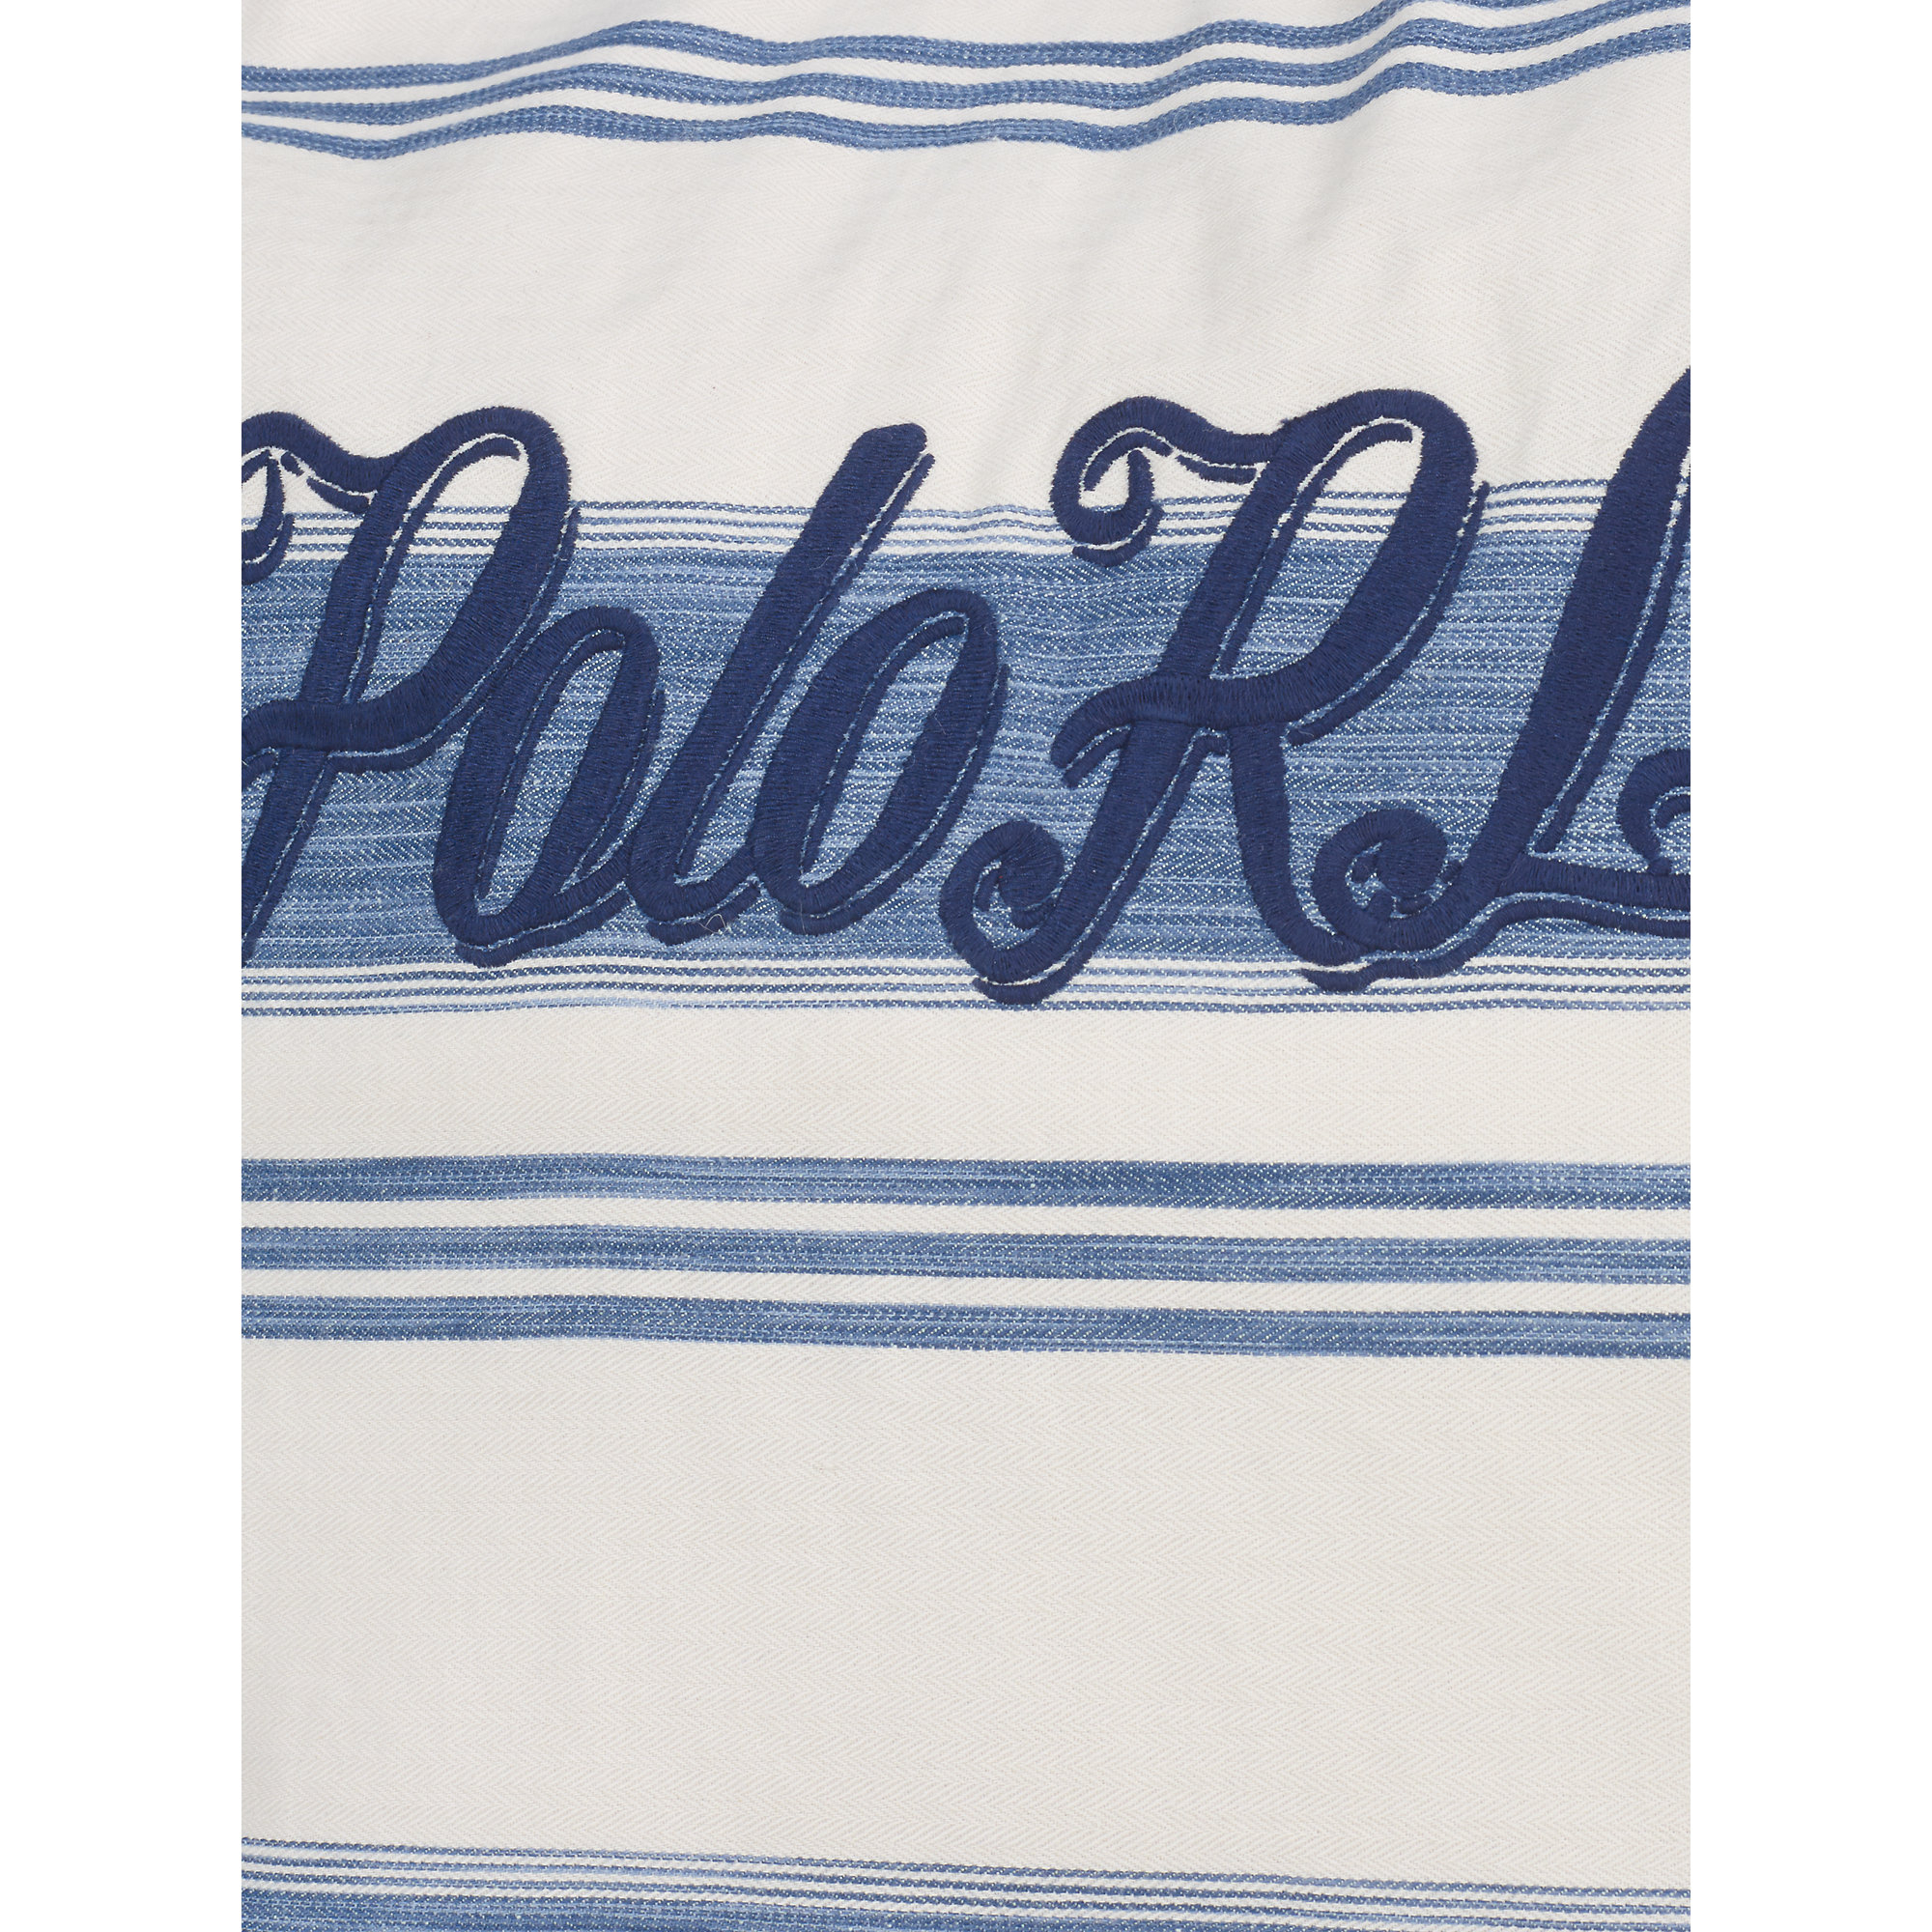 Polo Ralph Lauren Striped Beach Tote in Blue/White (Blue) - Lyst